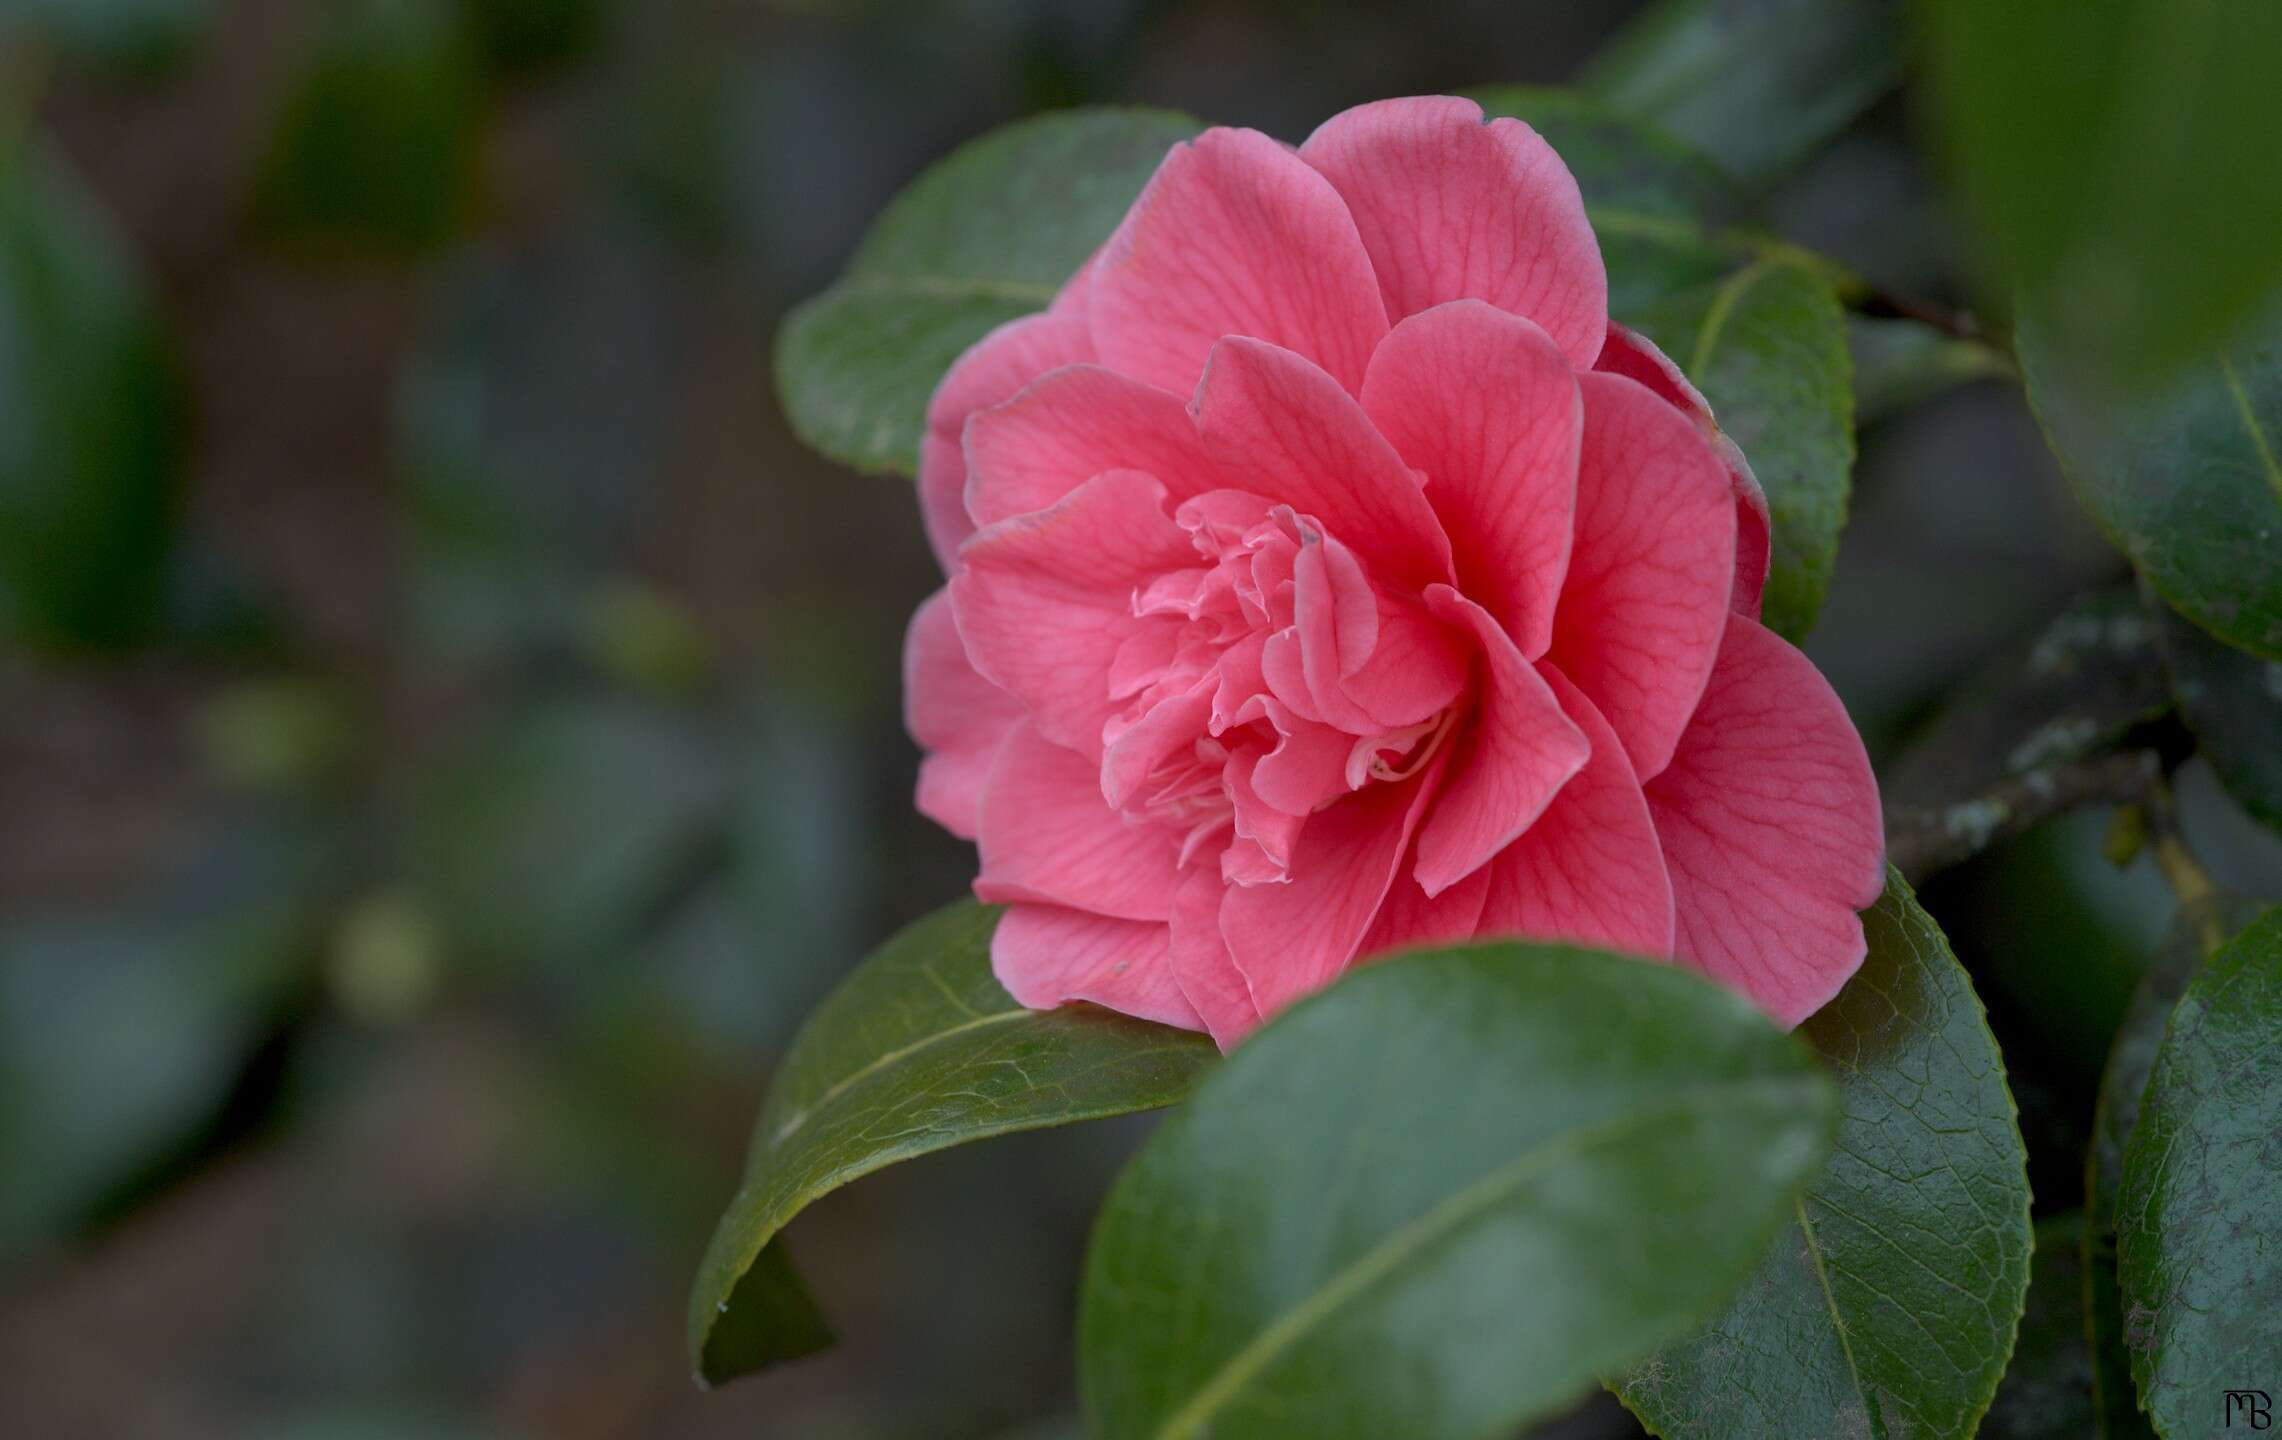 Pink rose on leaves